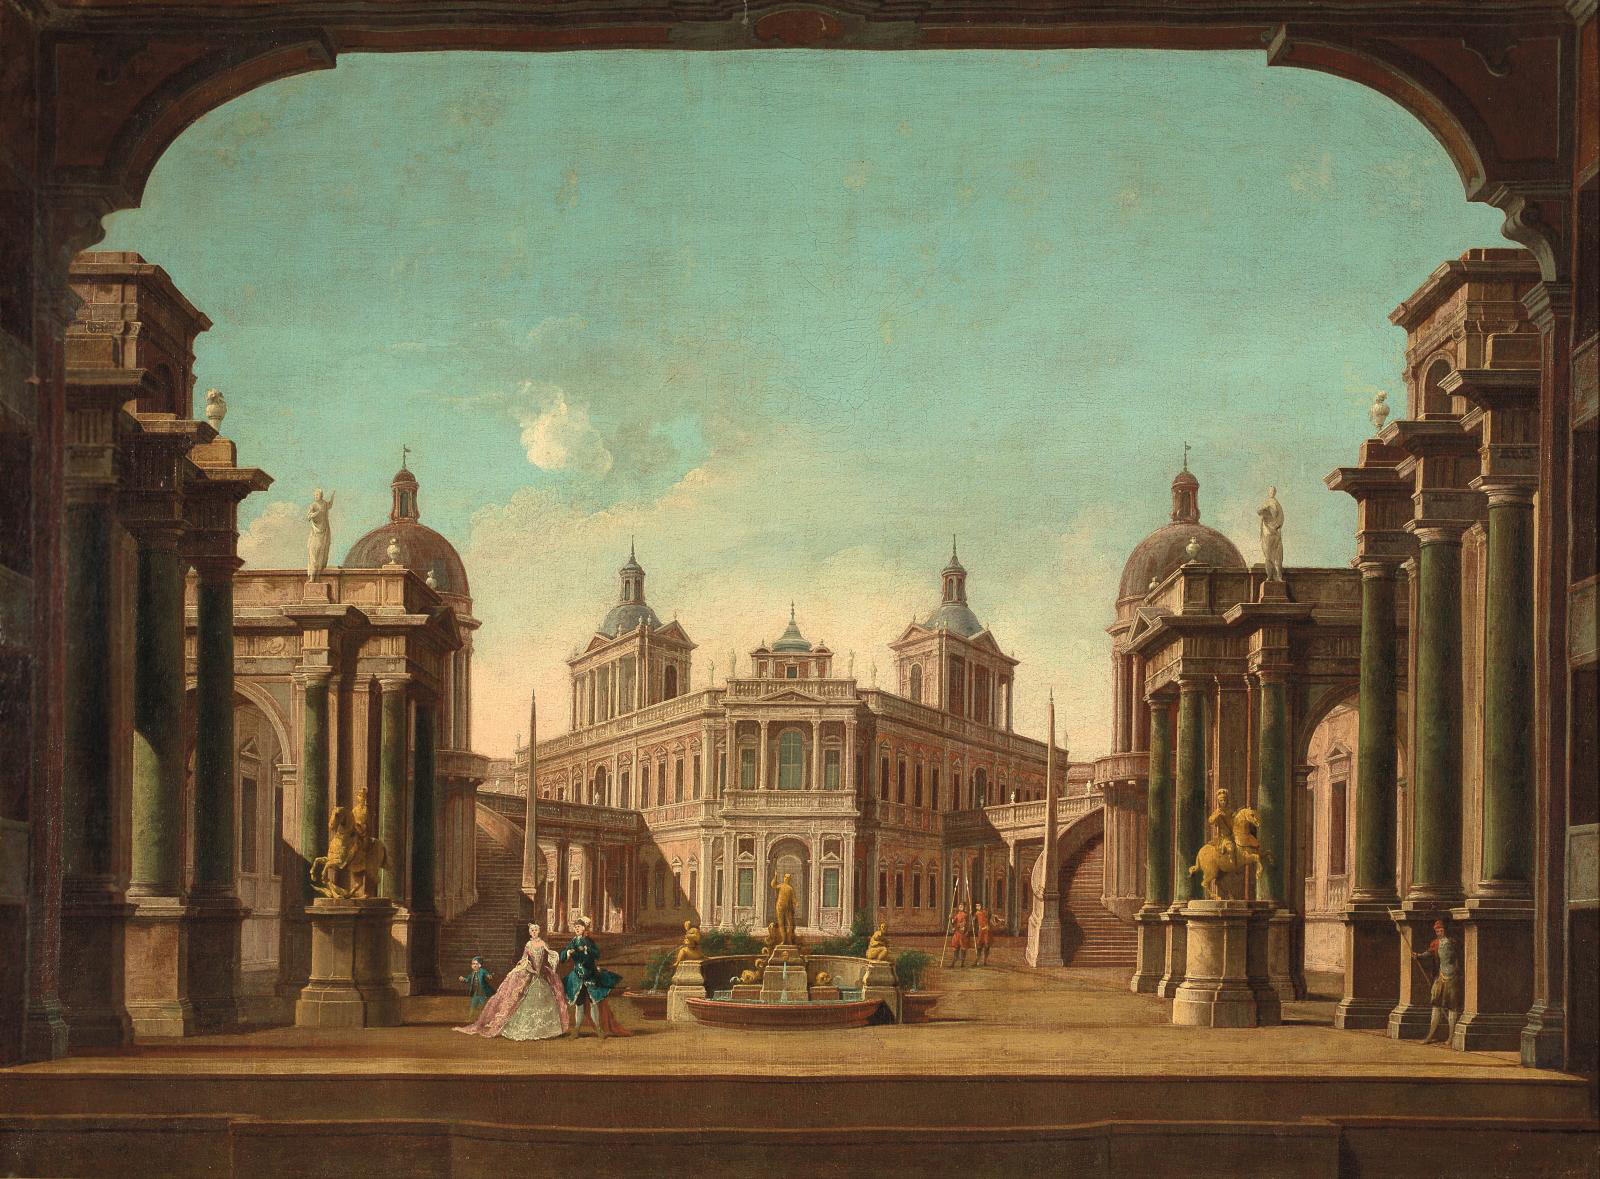 Francesco Battaglioli (1714-1796), View of a scene from the opera "Didone abbandonata" (act I, scene 9) by Metastasio and Galuppi, staged 